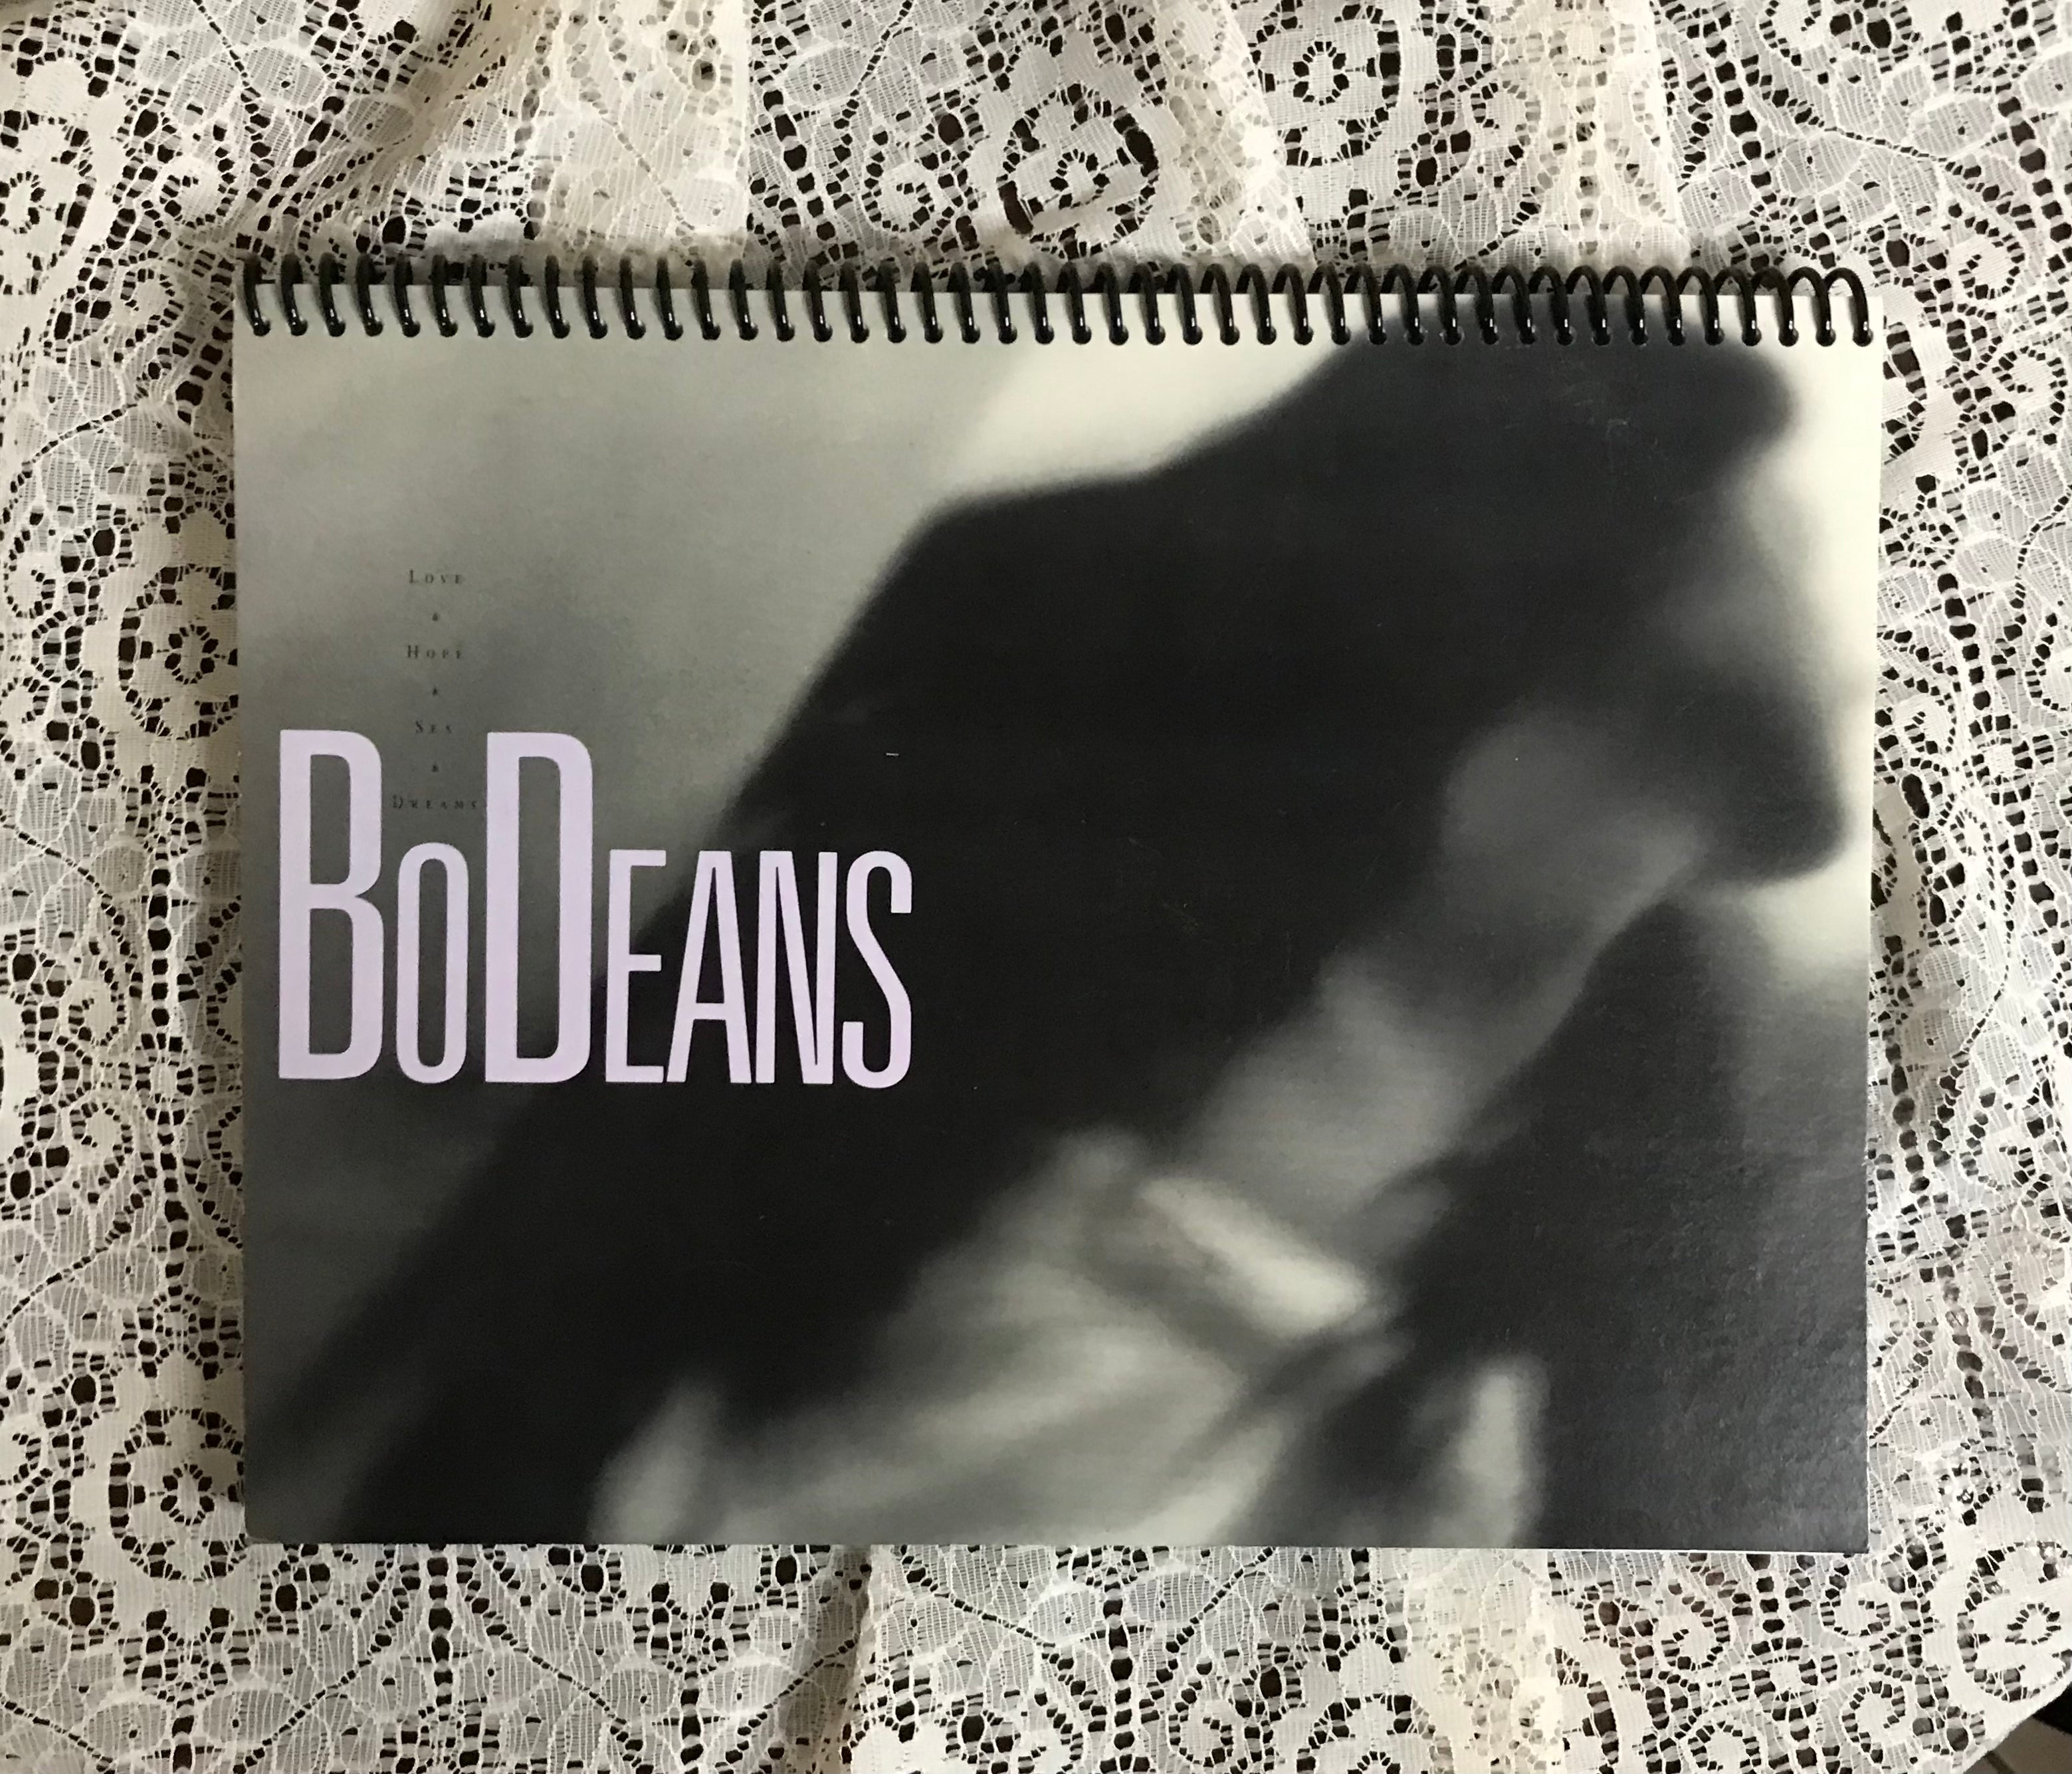 Bodeans Album Cover Notebook